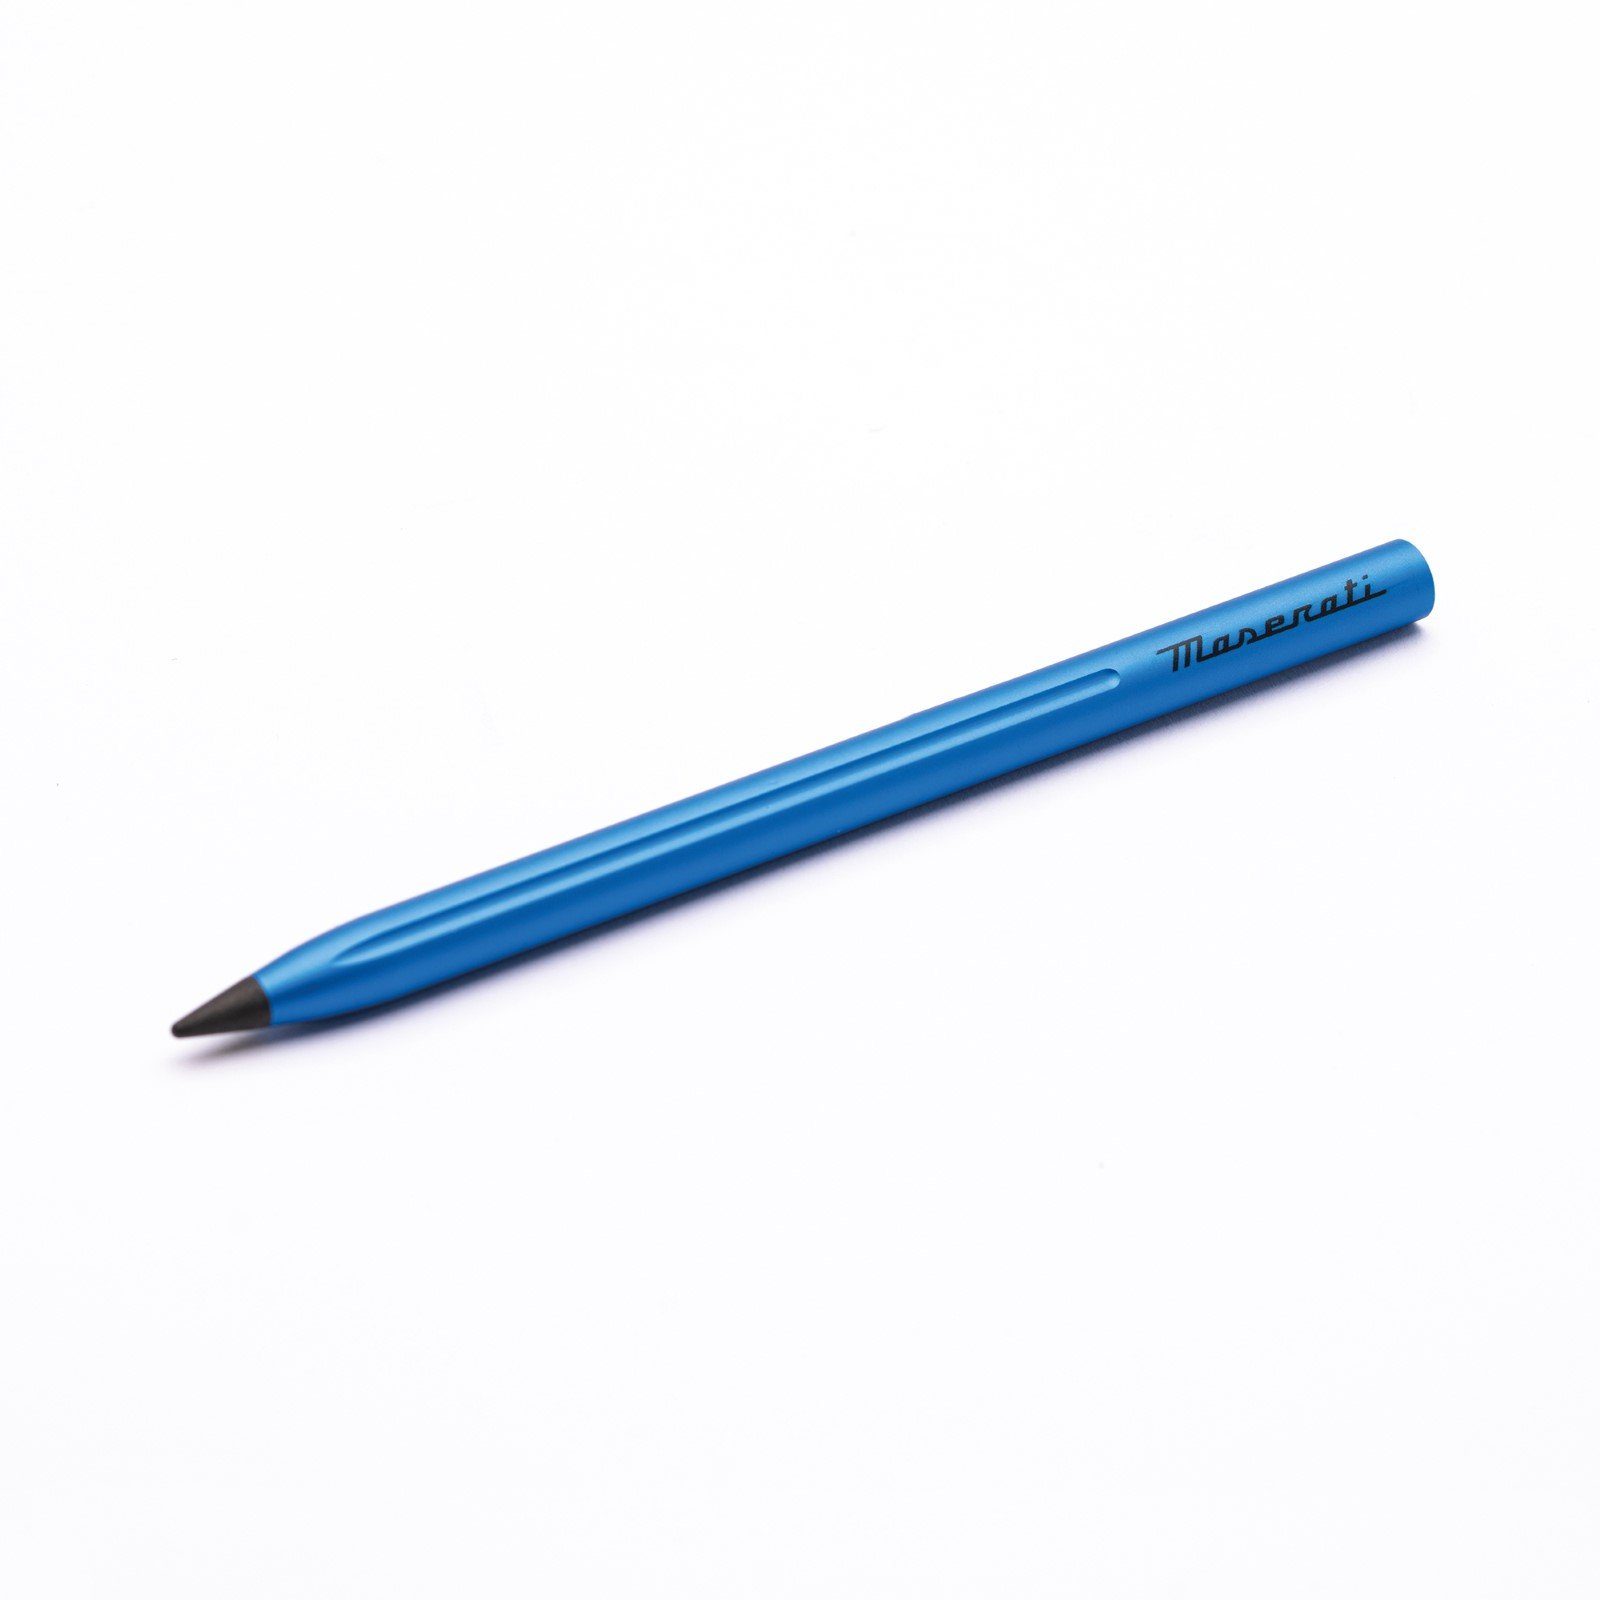 Pininfarina Bleistift Maserati Bleistift Grafeex Pininfarina Smart Pencil Bleier Schreibgerä, (kein Set) Blau